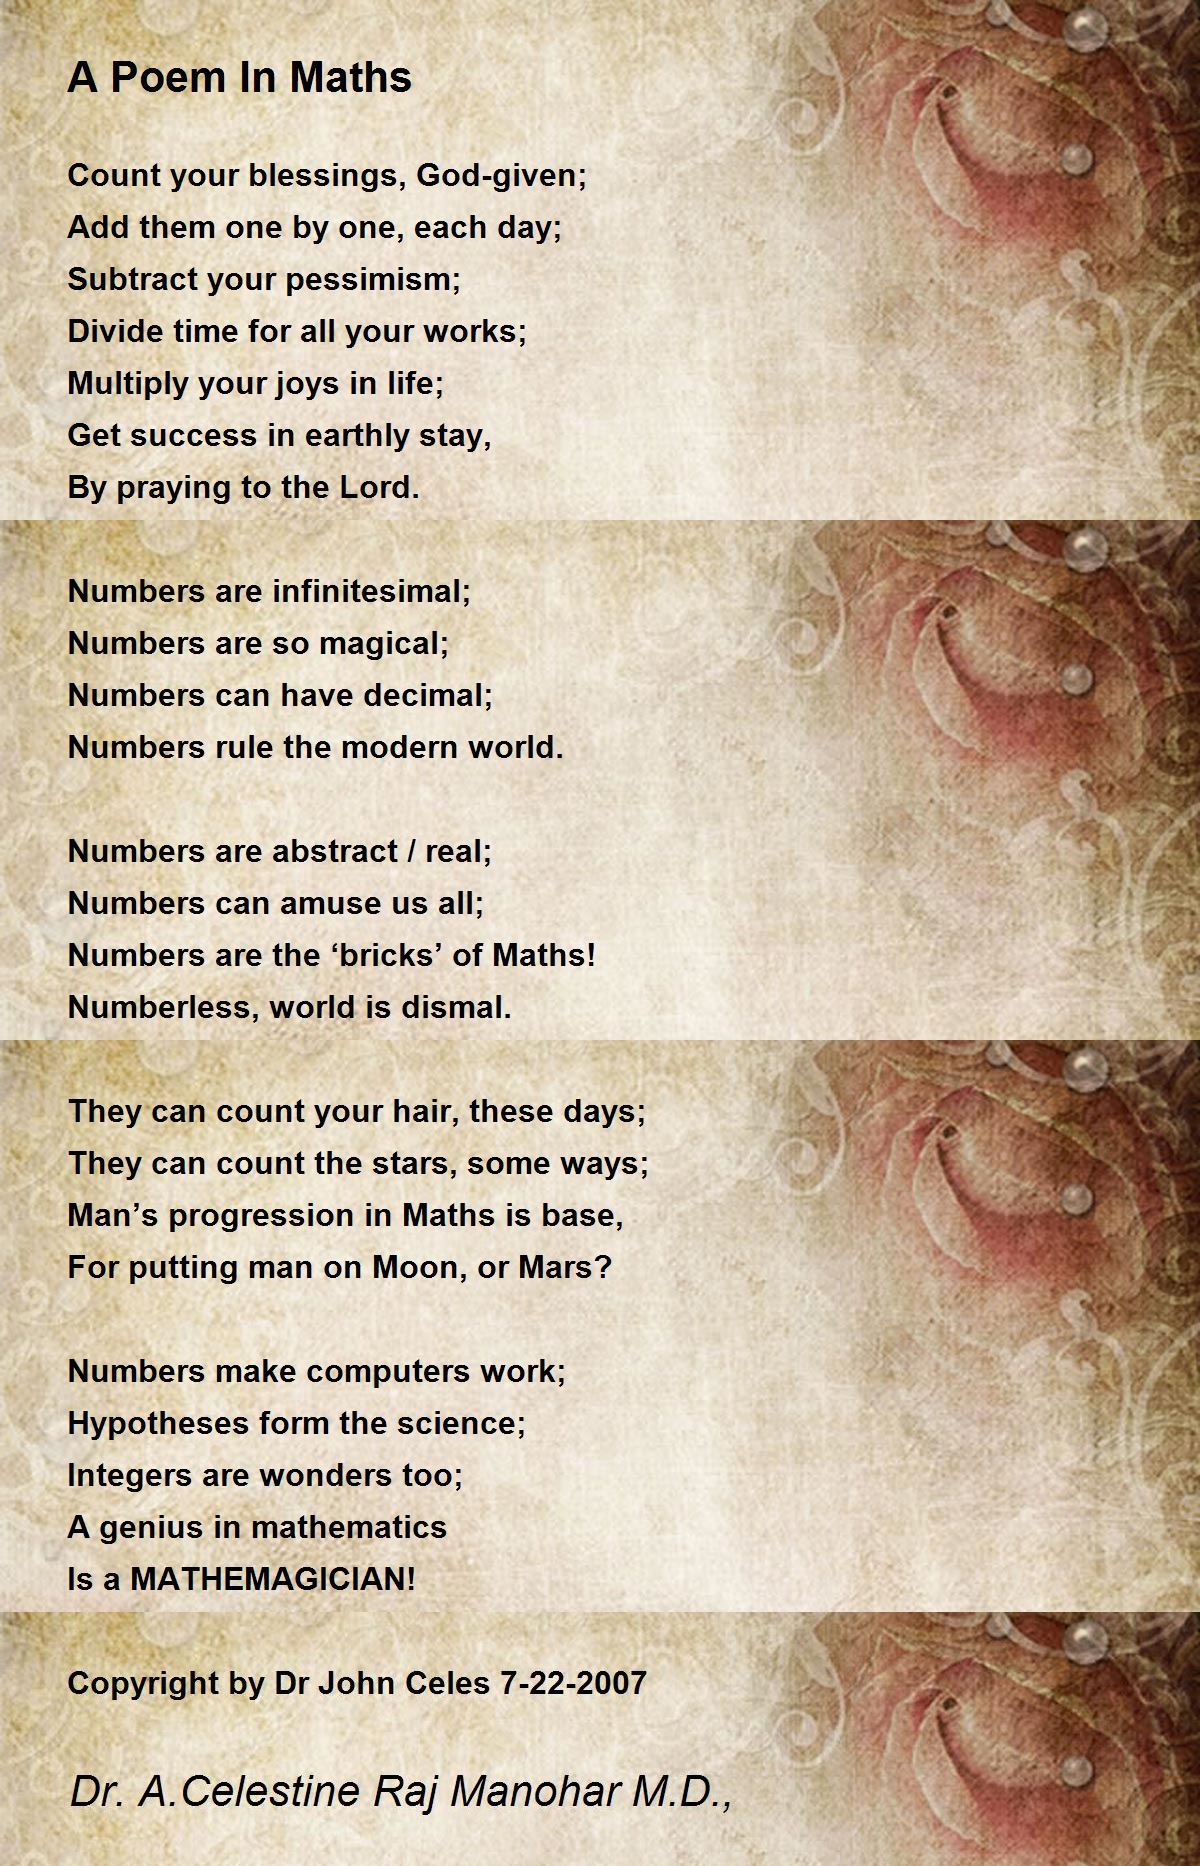 A Poem In Maths by Dr John Celes - A Poem In Maths Poem